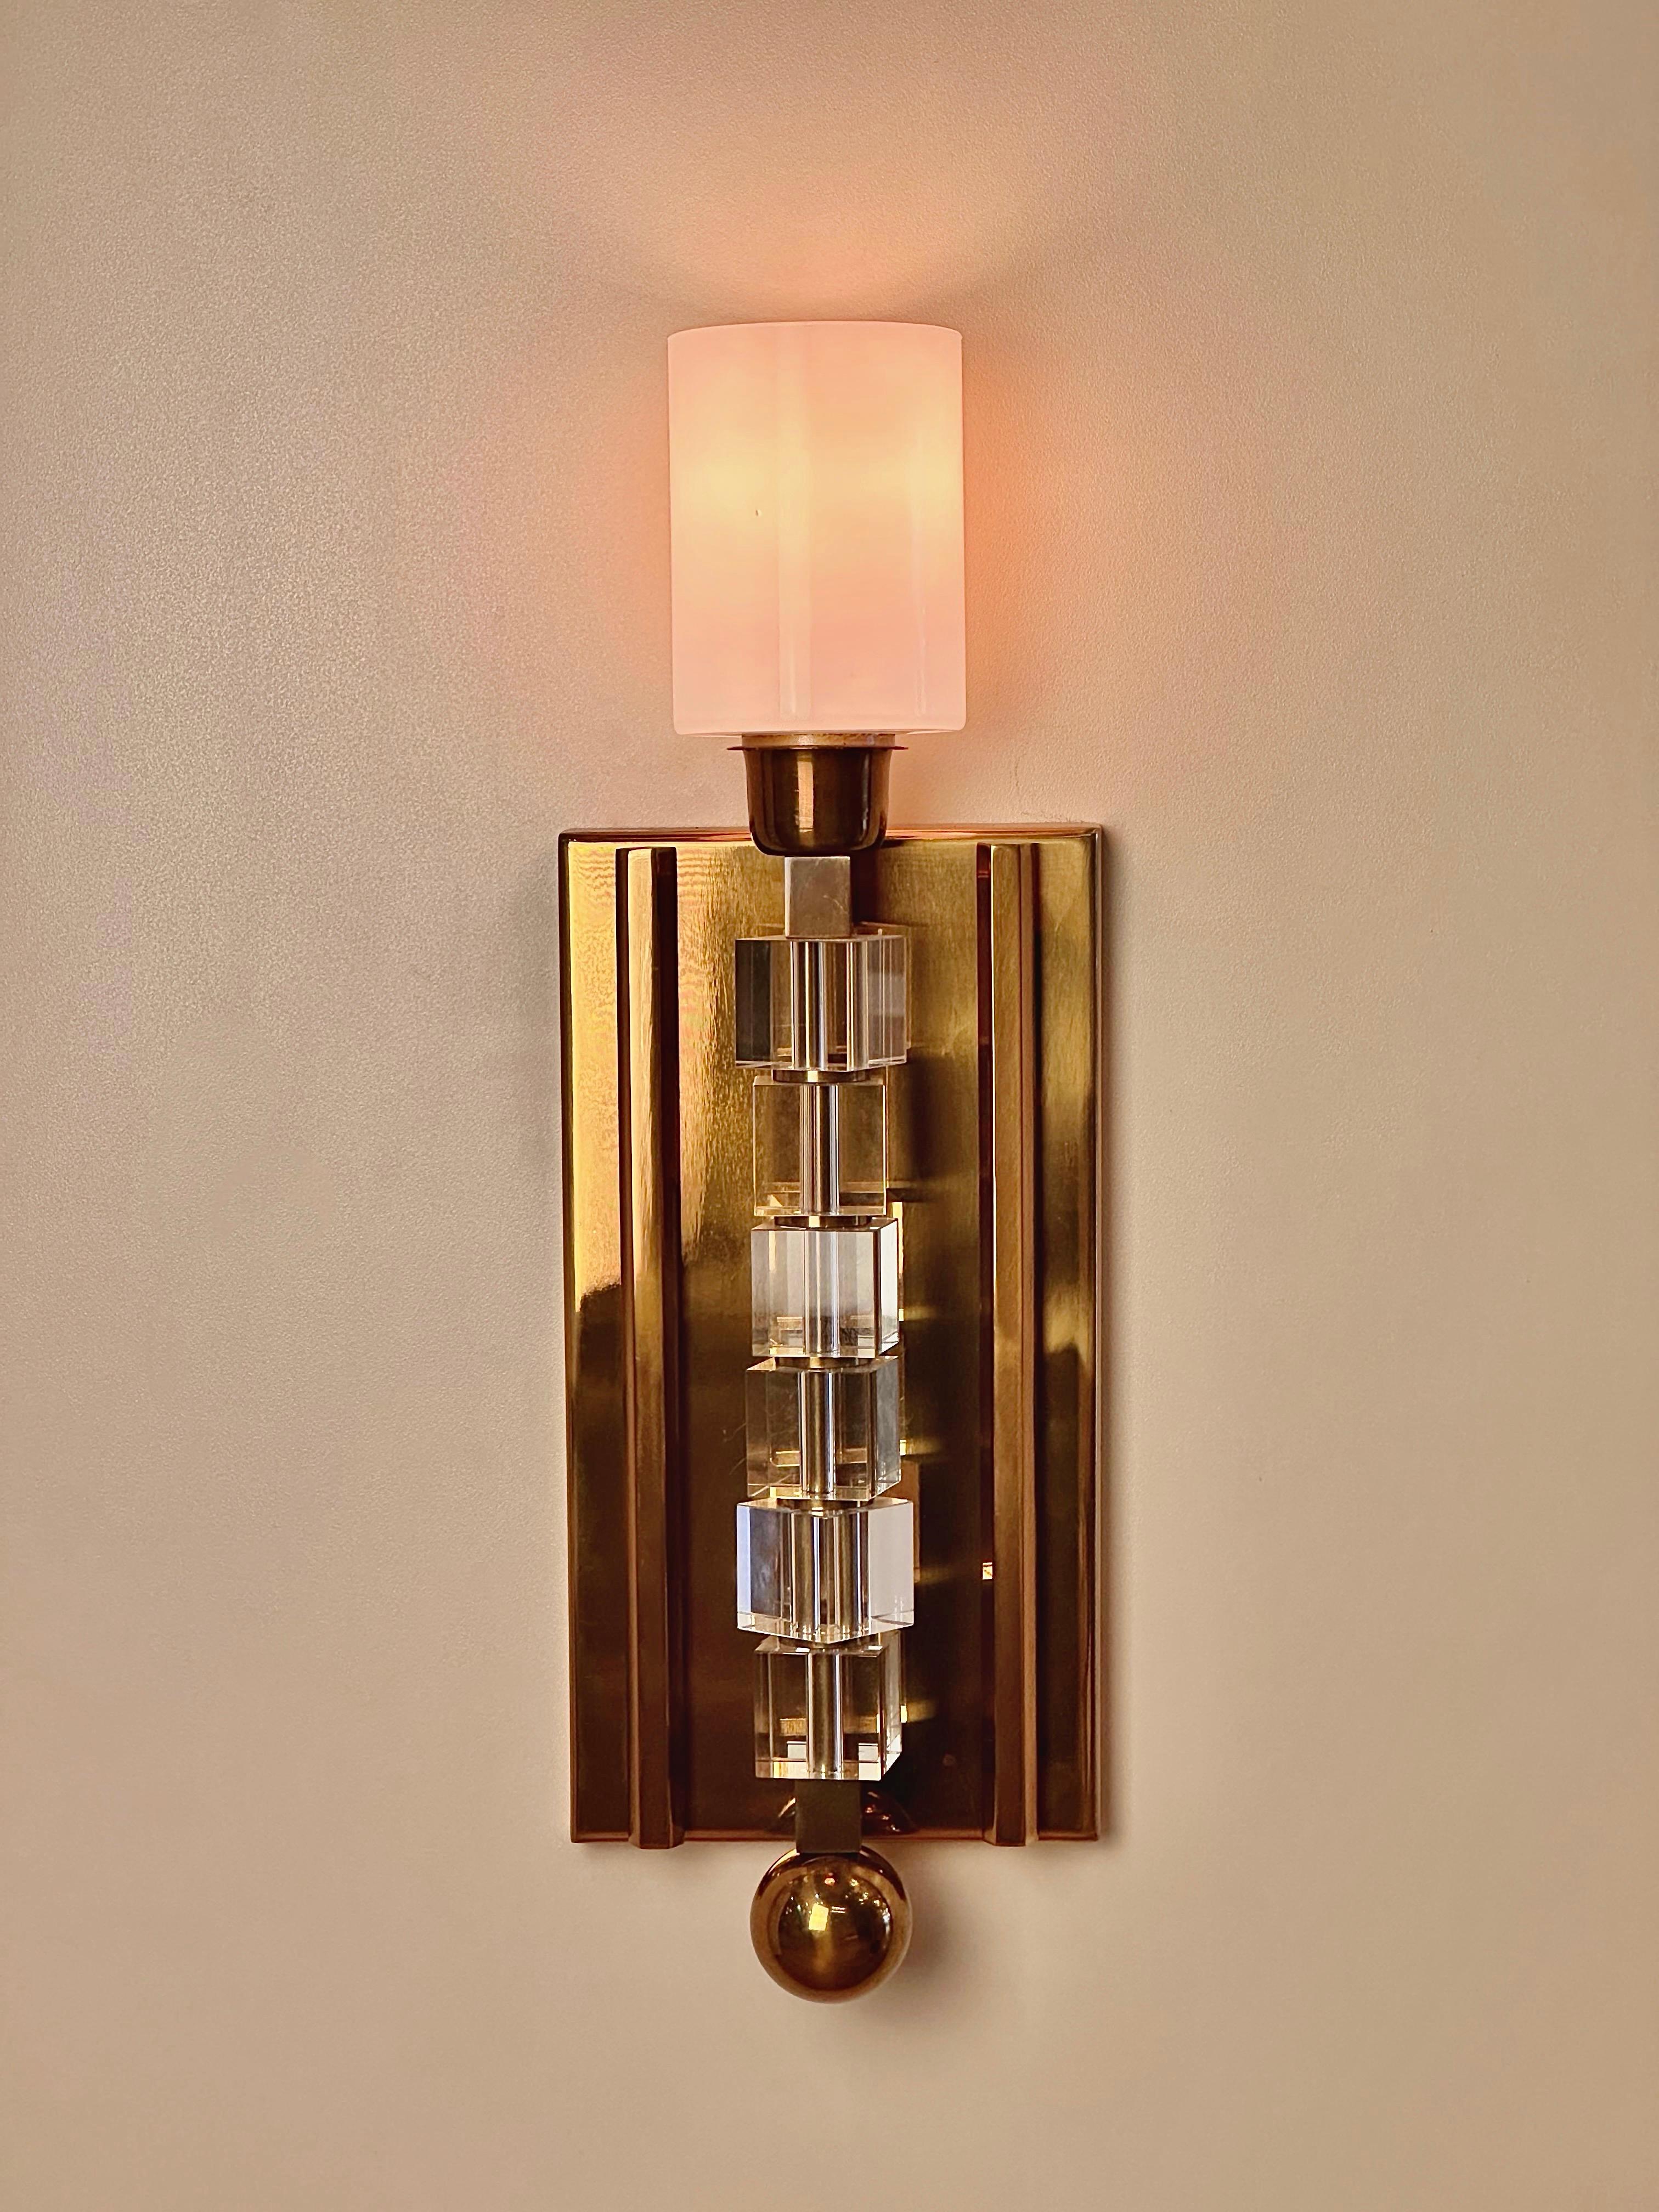 Glass Tortona Brass Lampshade Wall Sconce Mid-Century Modern Lighting For Sale